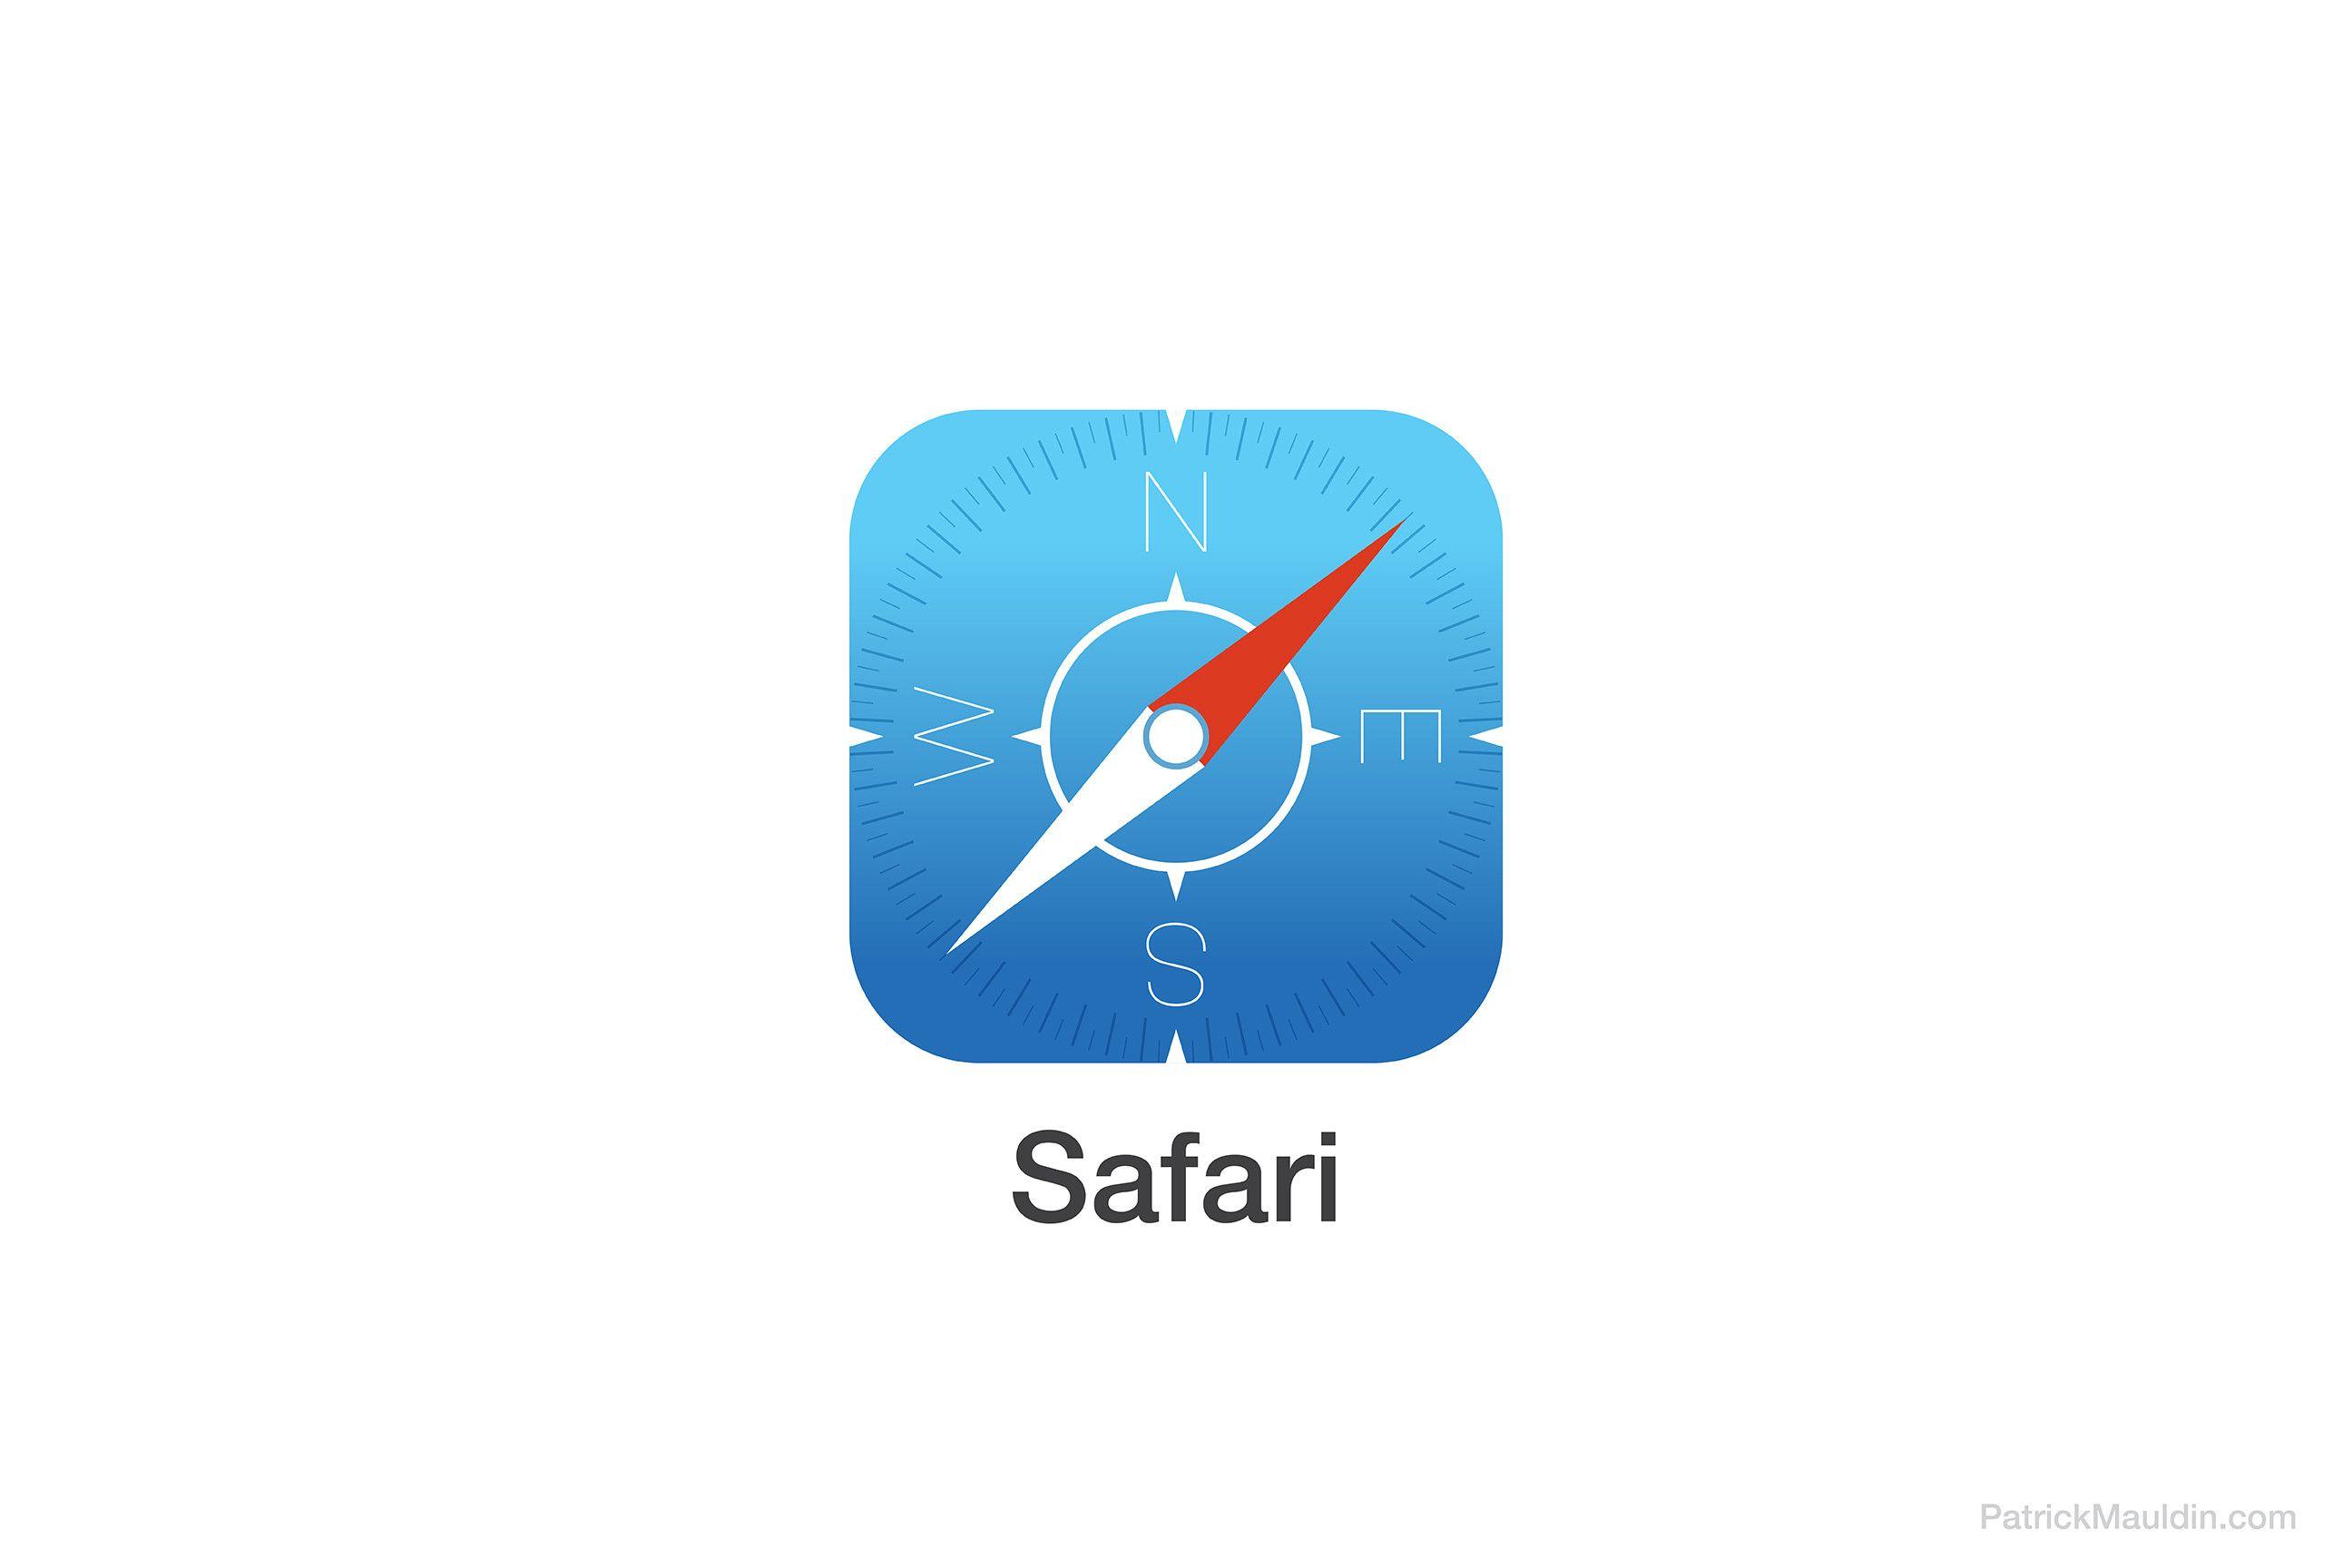 New Safari Logo - I redesigned the new iOS 7 Safari icon. What do you think?